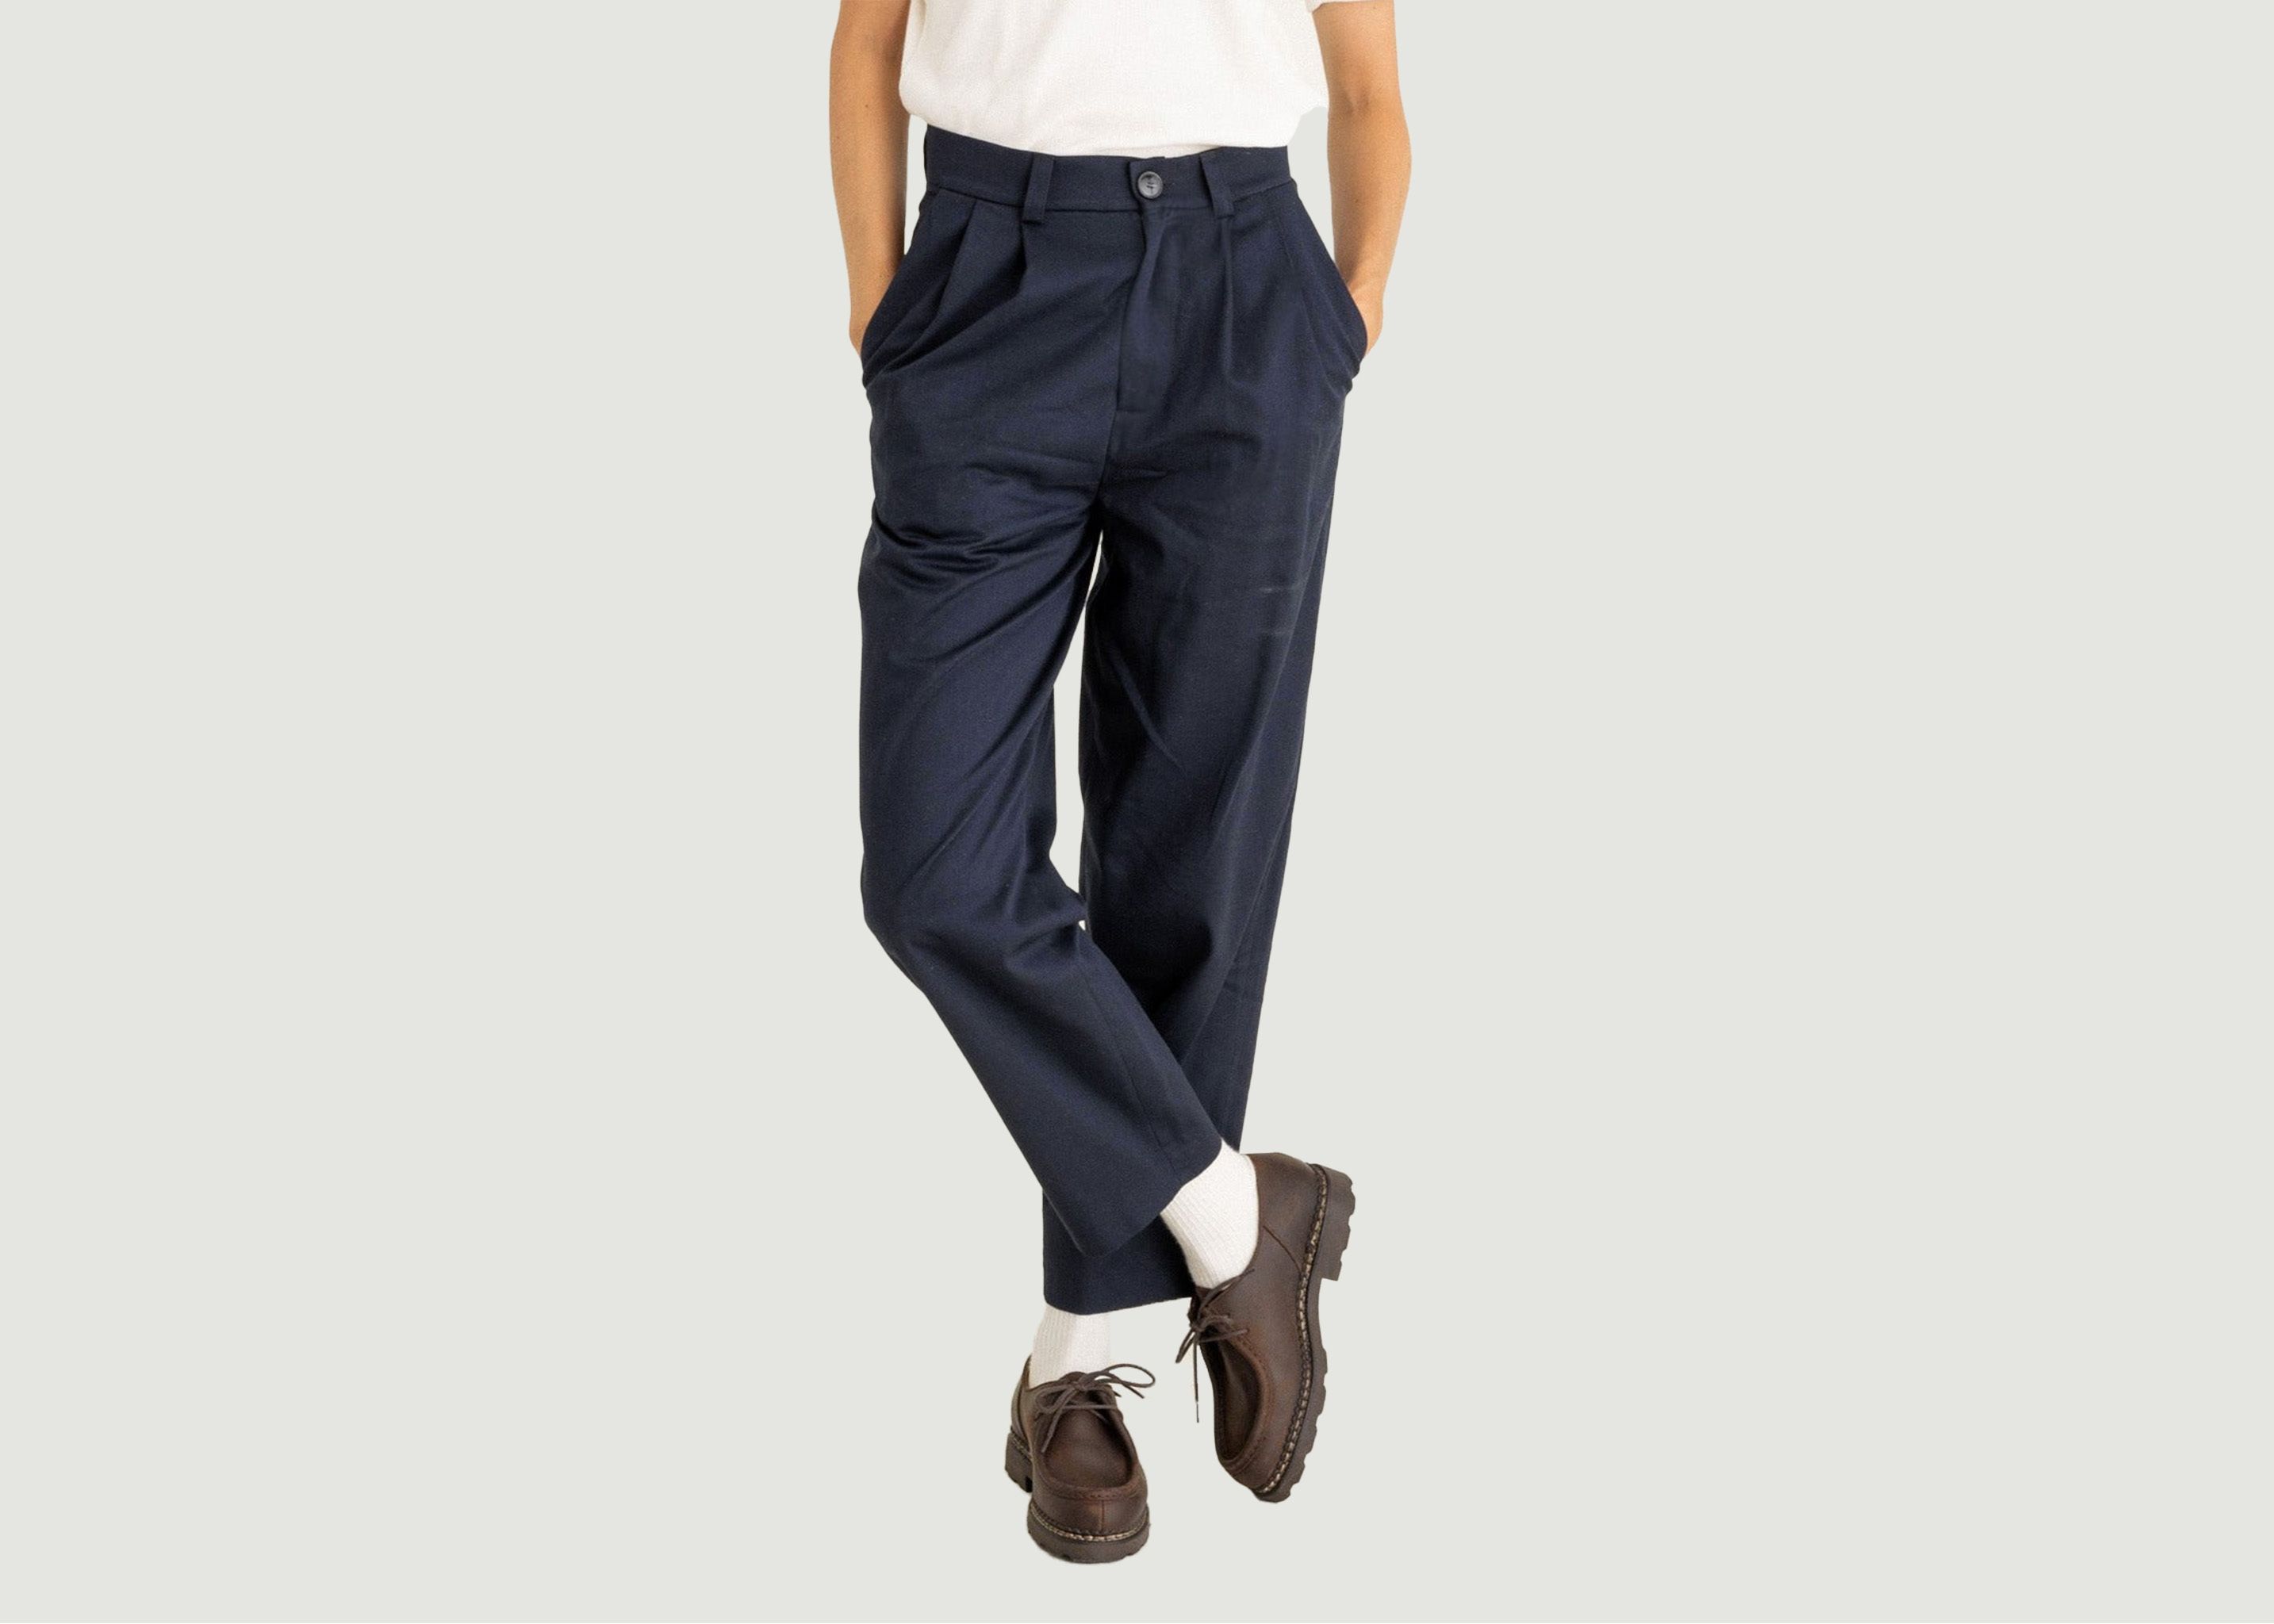 Cambridge trousers - noyoco